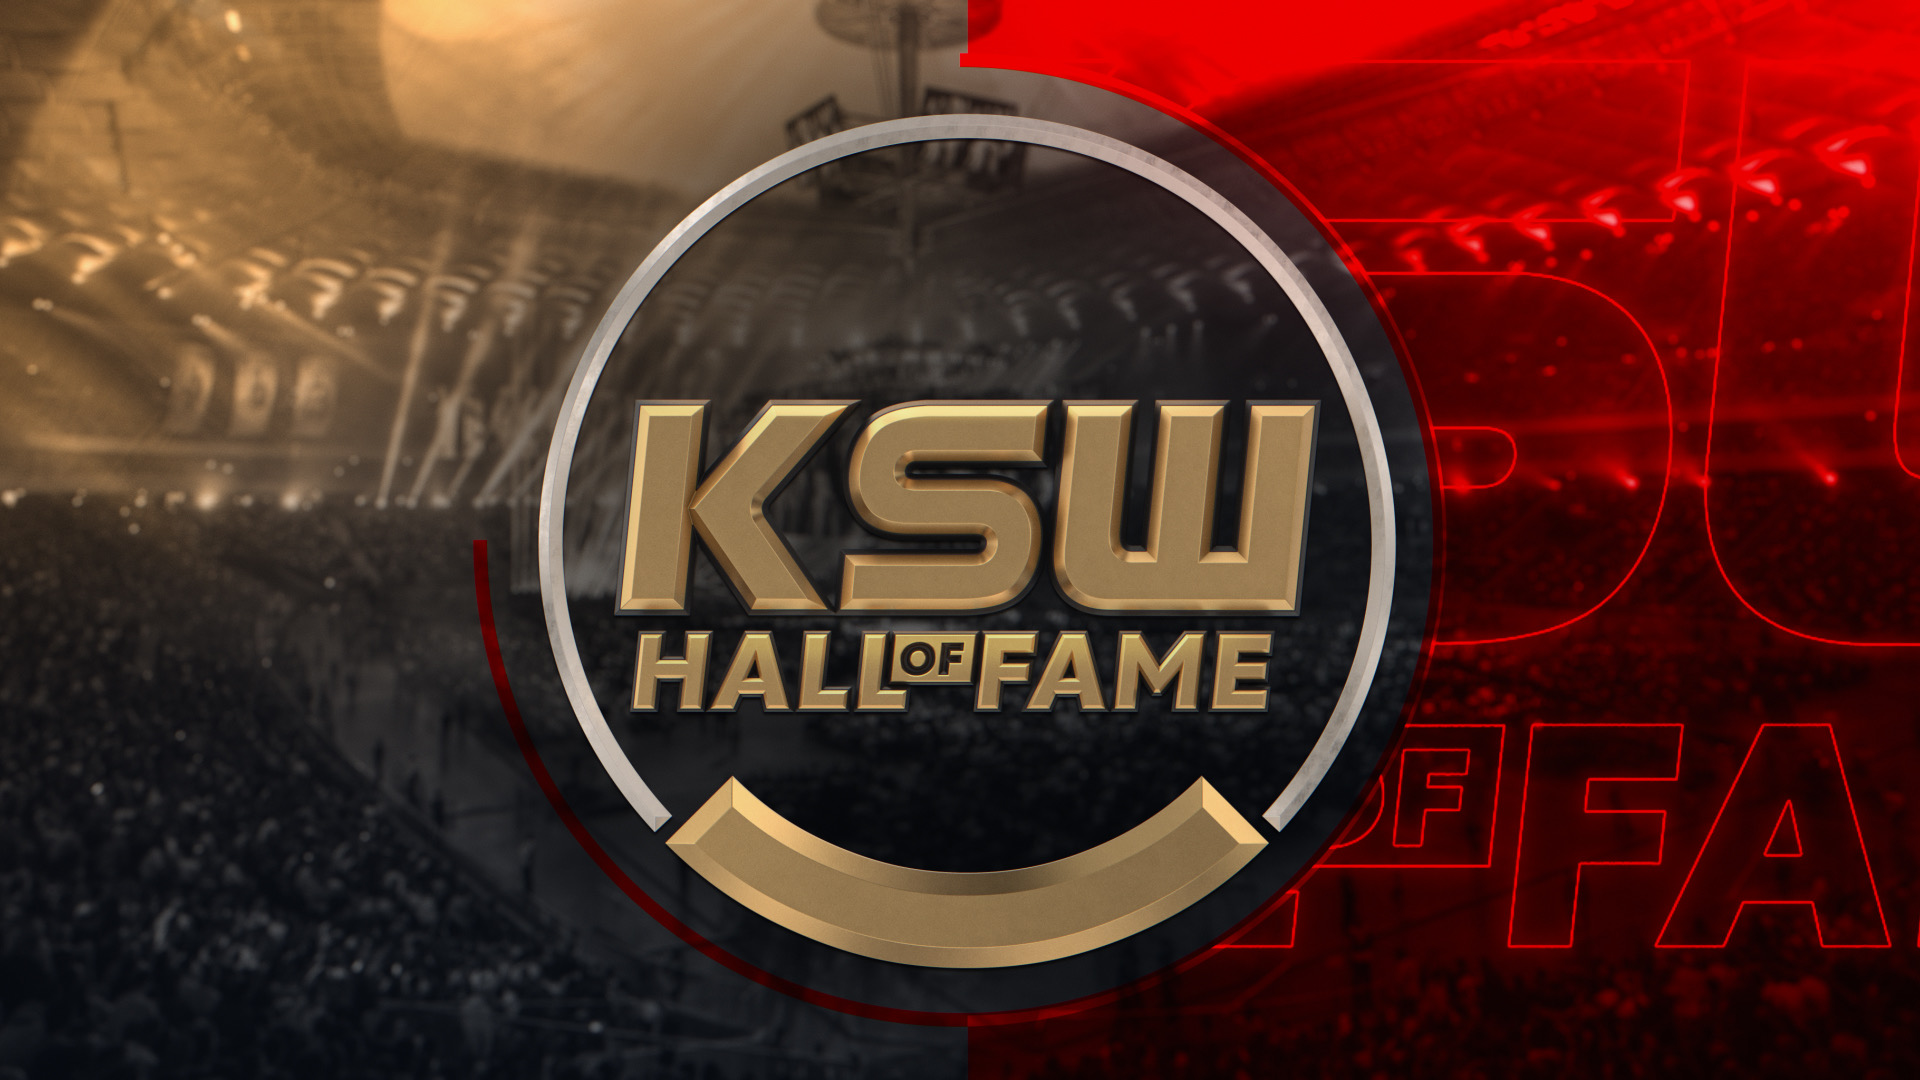 KSW Hall of Fame